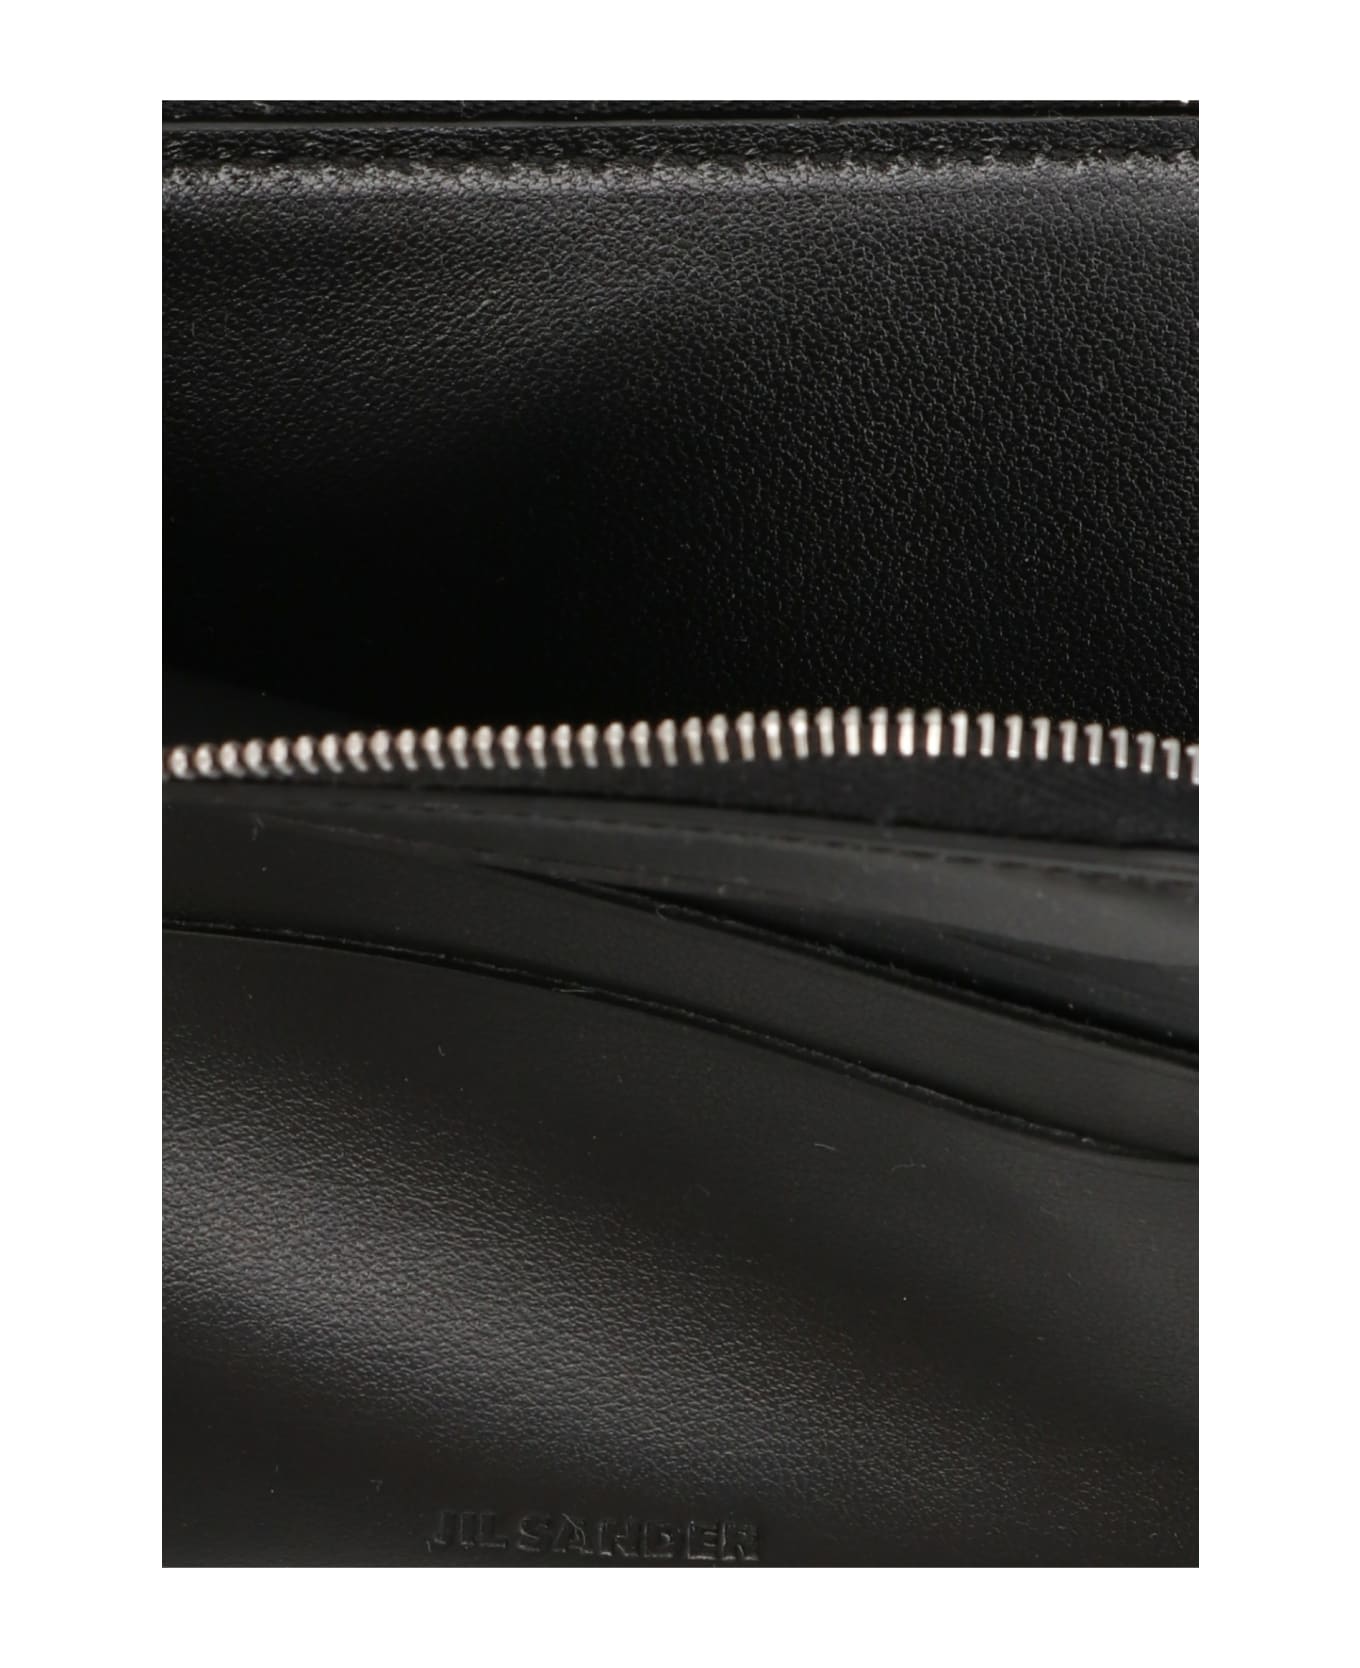 Jil Sander Leather Wallet